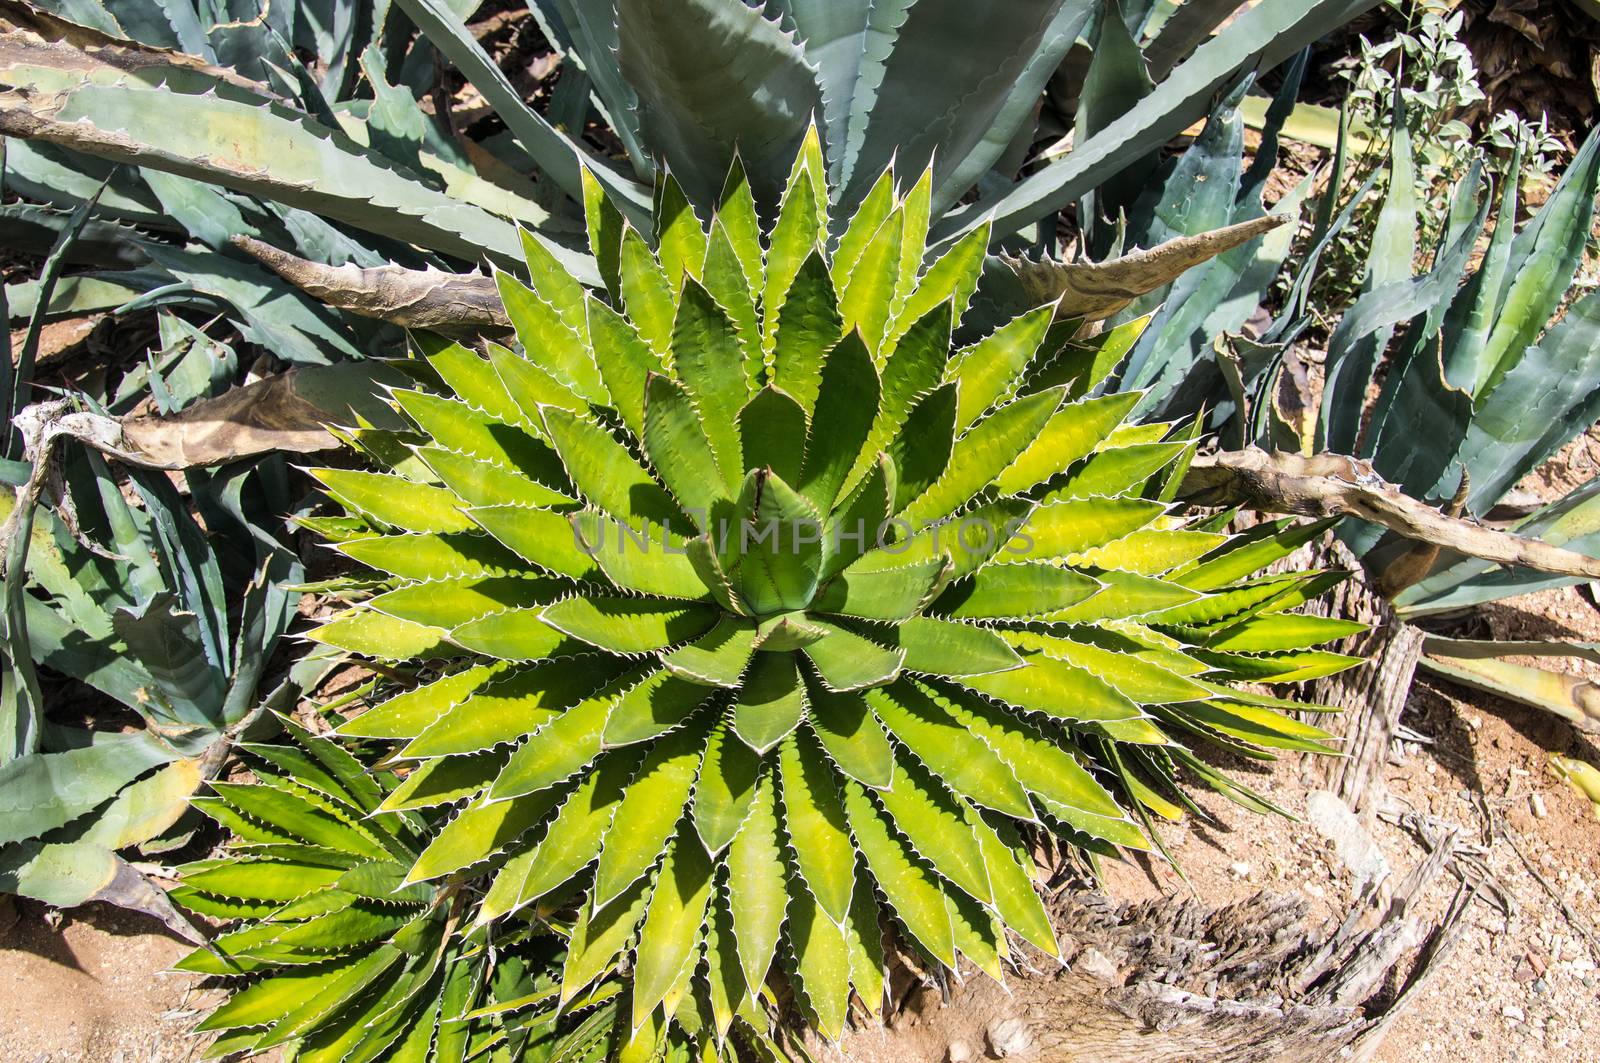 Greens of cacti in Arizona desert